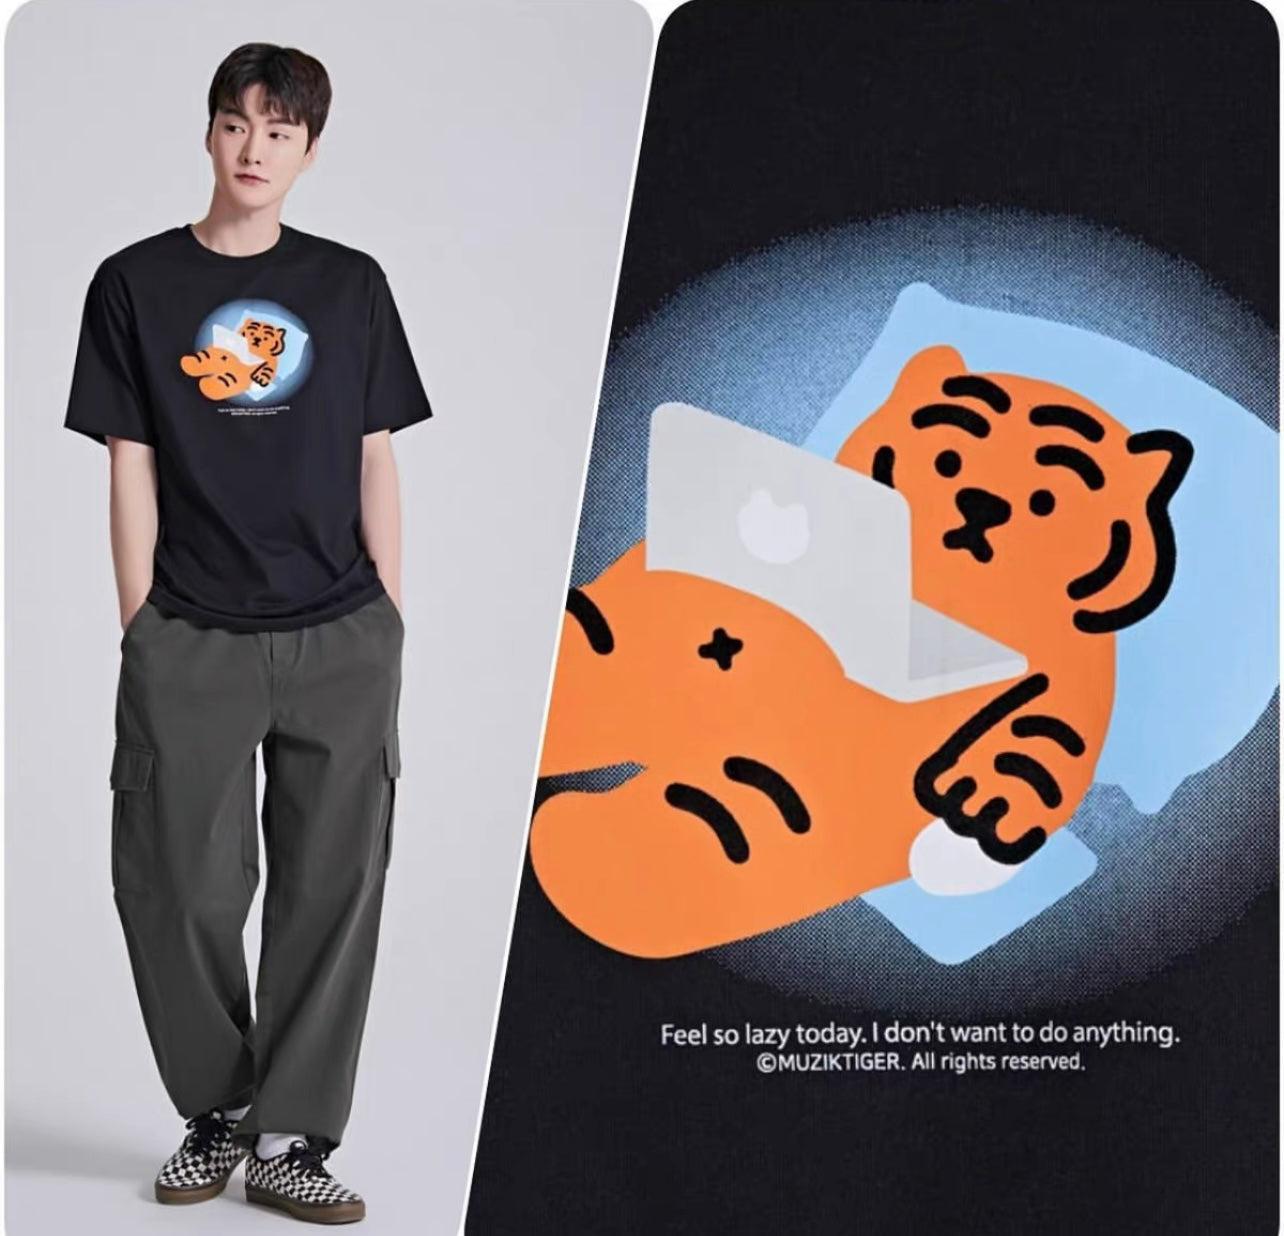 SPAO Muzik Tiger This Year's Star Is T-Shirt (Black)